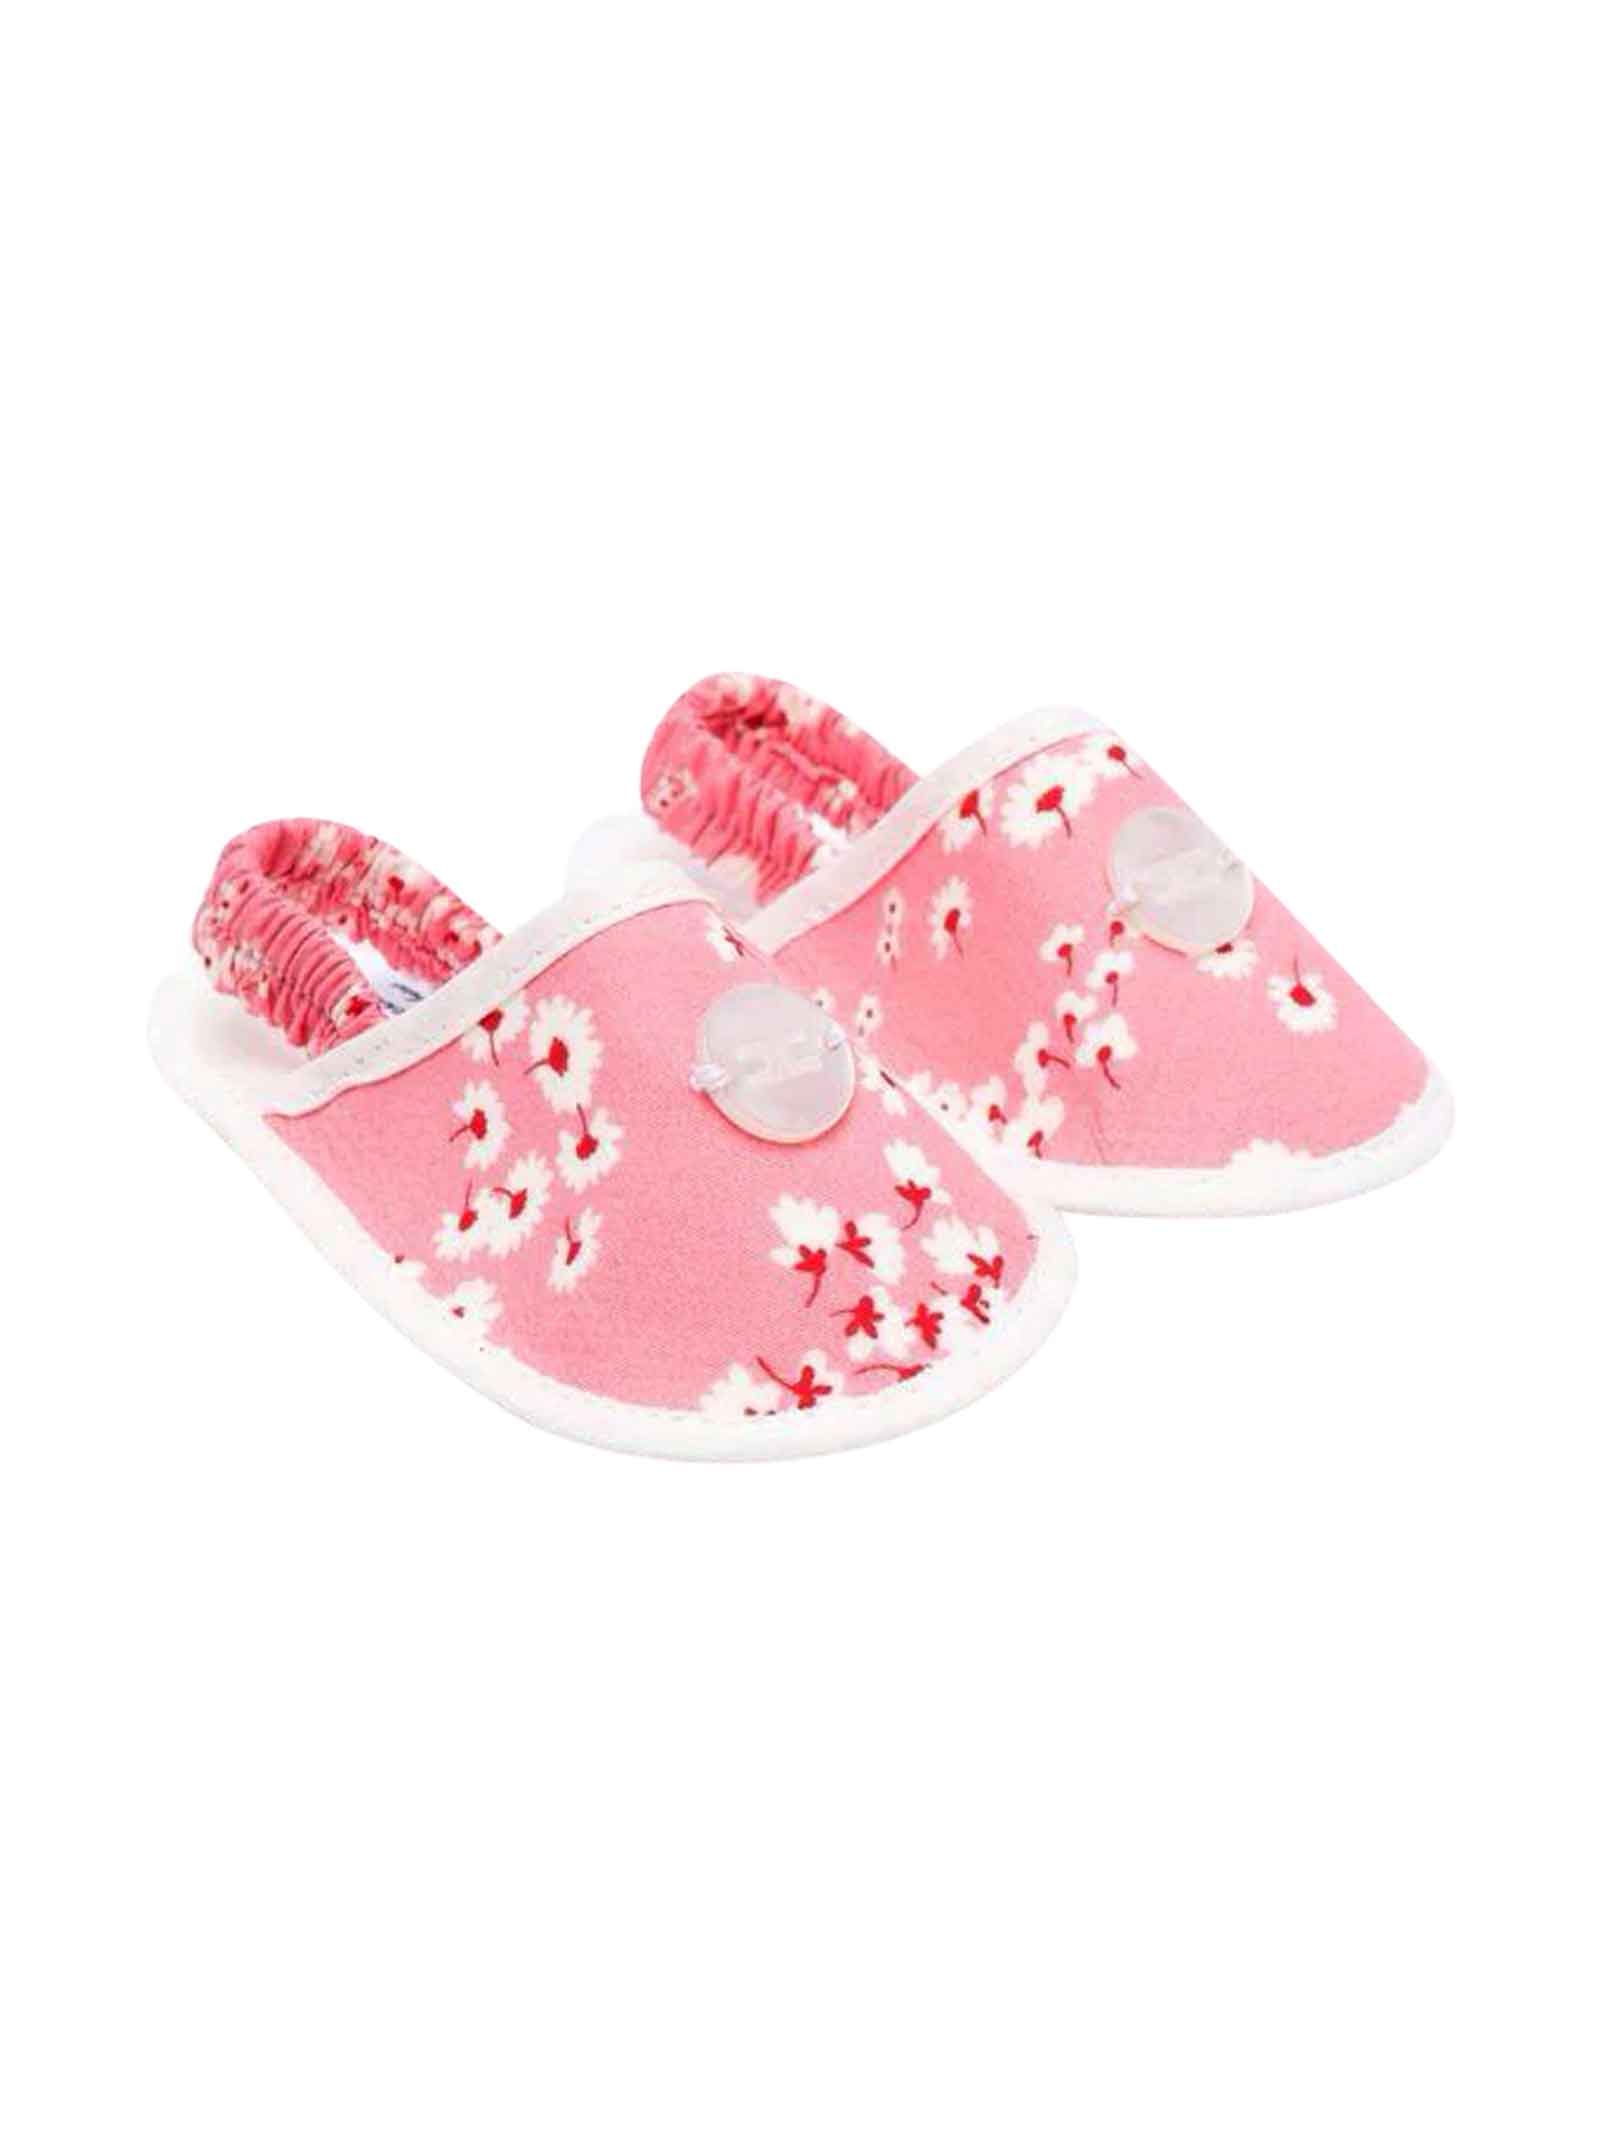 Elisabetta Franchi La Mia Bambina Pink Slippers Baby